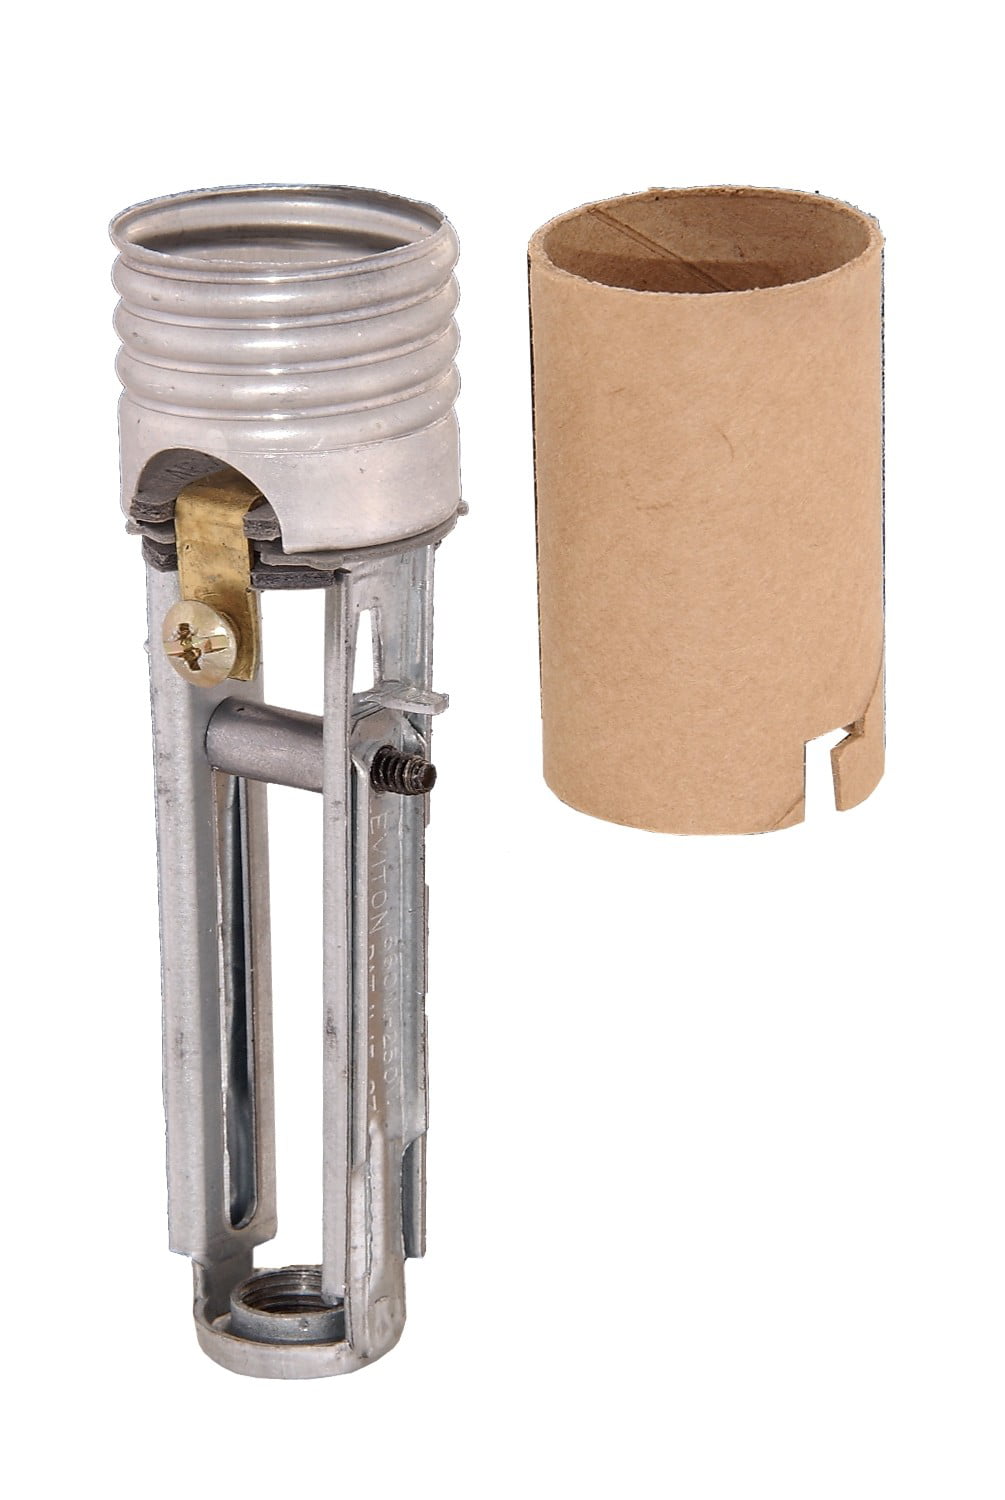 B&P Lamp® Keyless Candelabra Socket W/Spring Clips Import Brand 